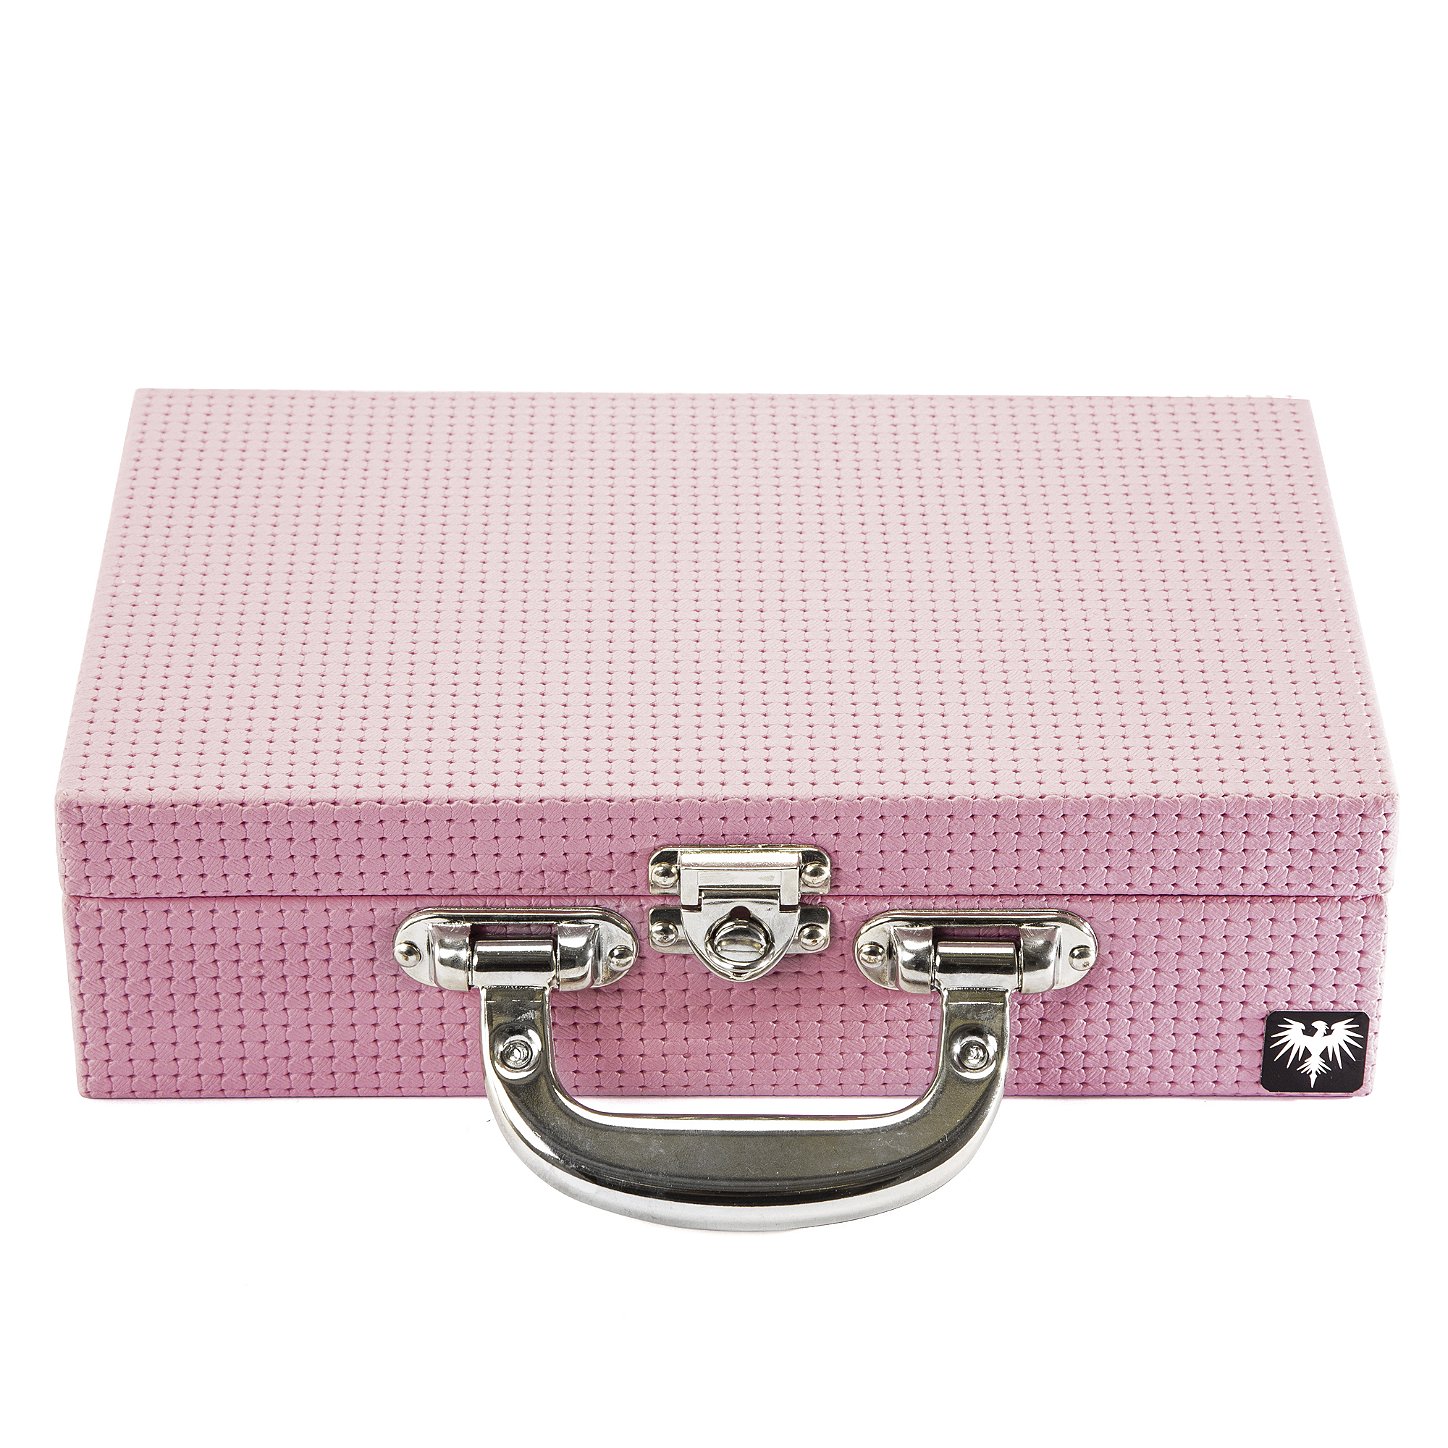 maleta-porta-joias-couro-ecologico-croco-rosa-rosa-imagem-7.jpg